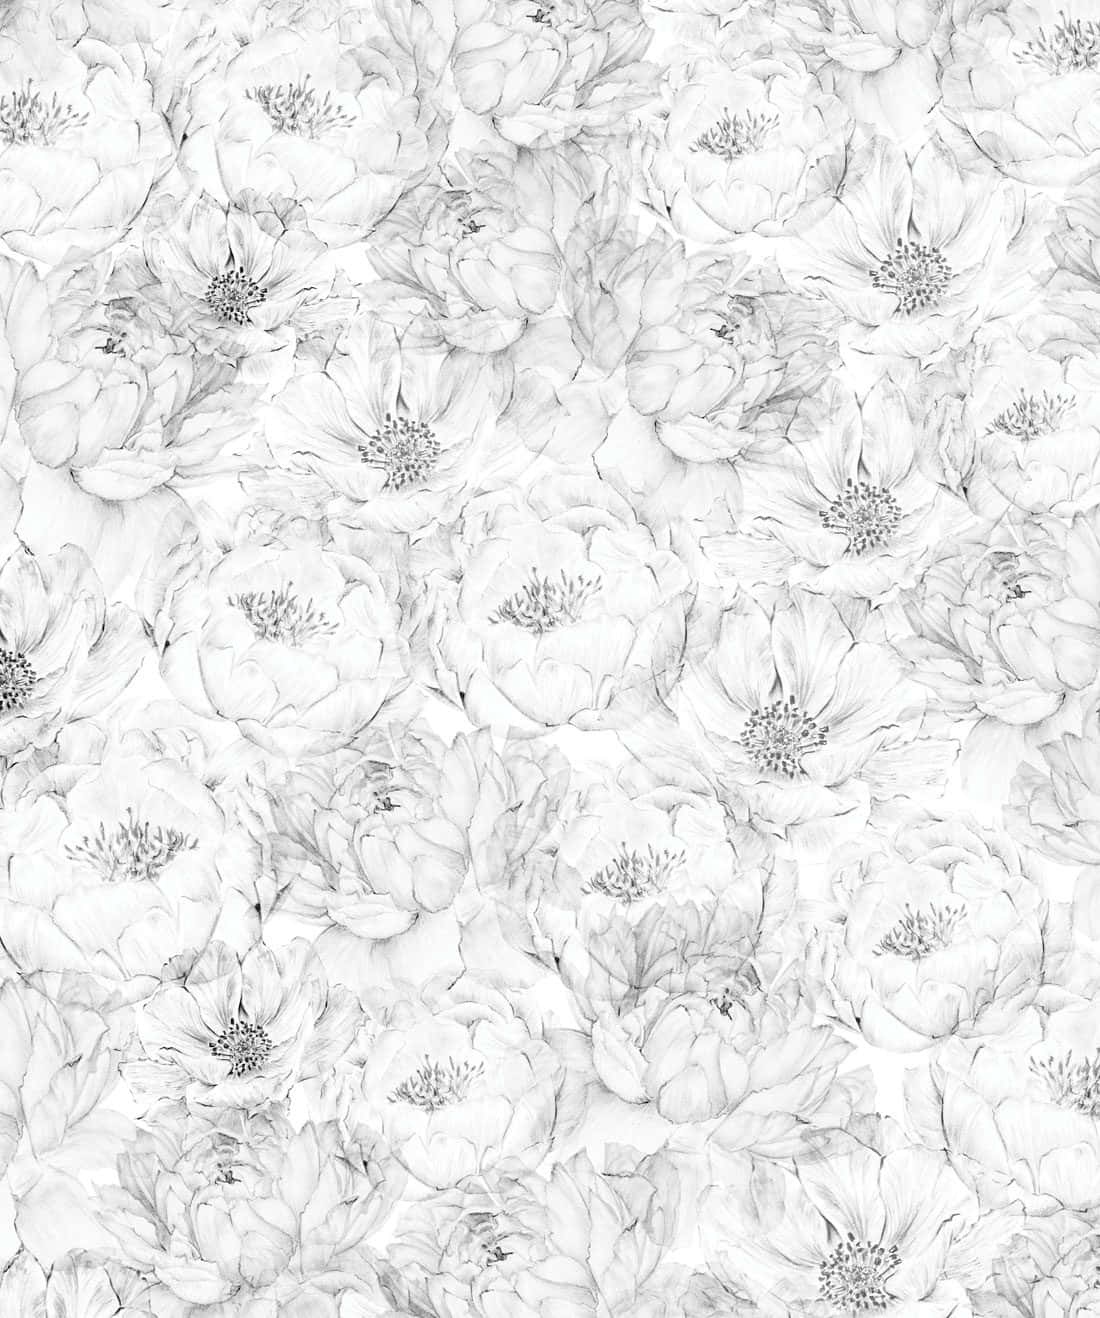 Neutral_ Floral_ Pattern_ Background.jpg Wallpaper